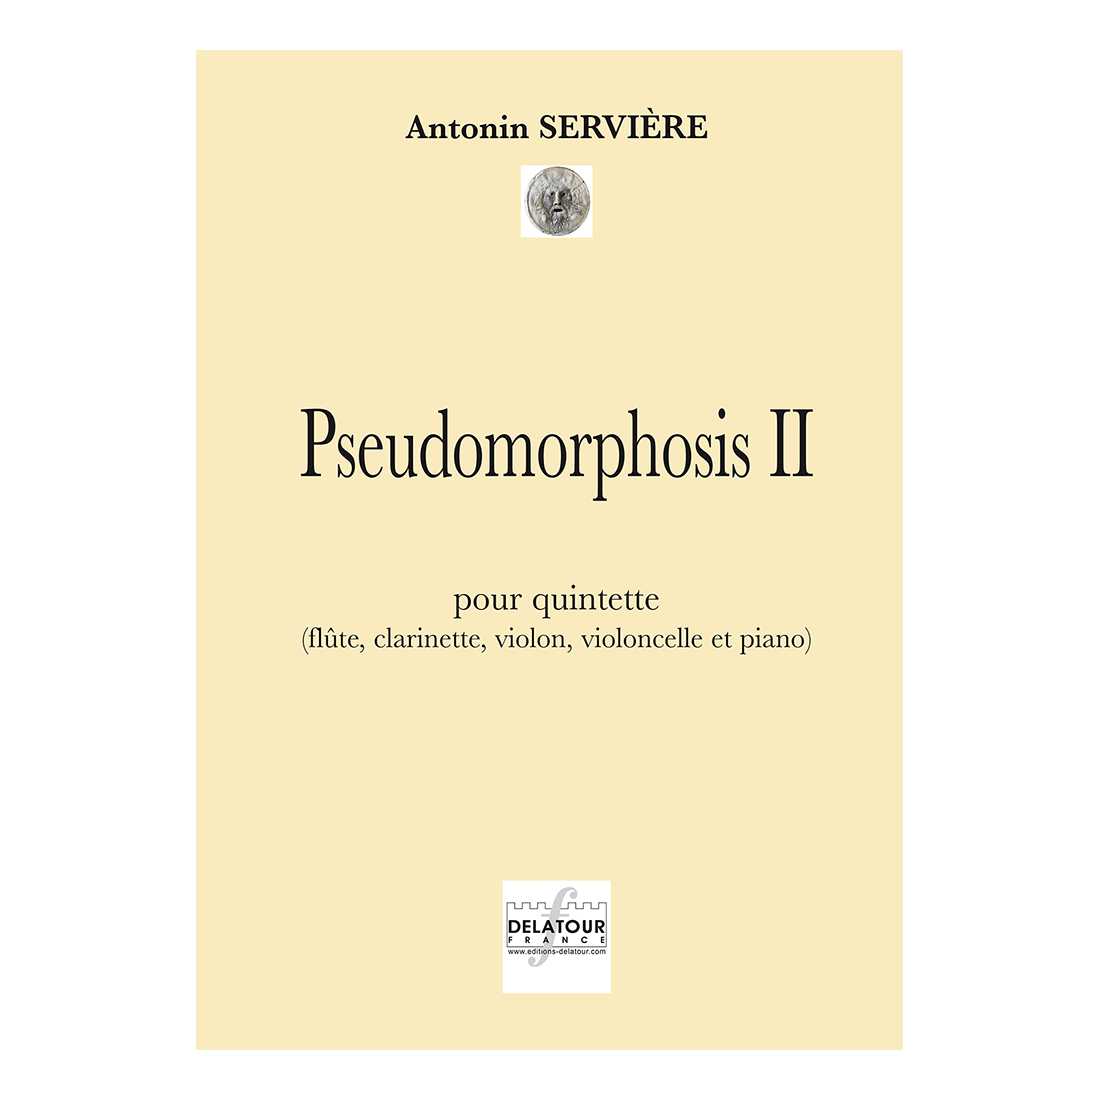 Pseudomorphosis II für Quintett